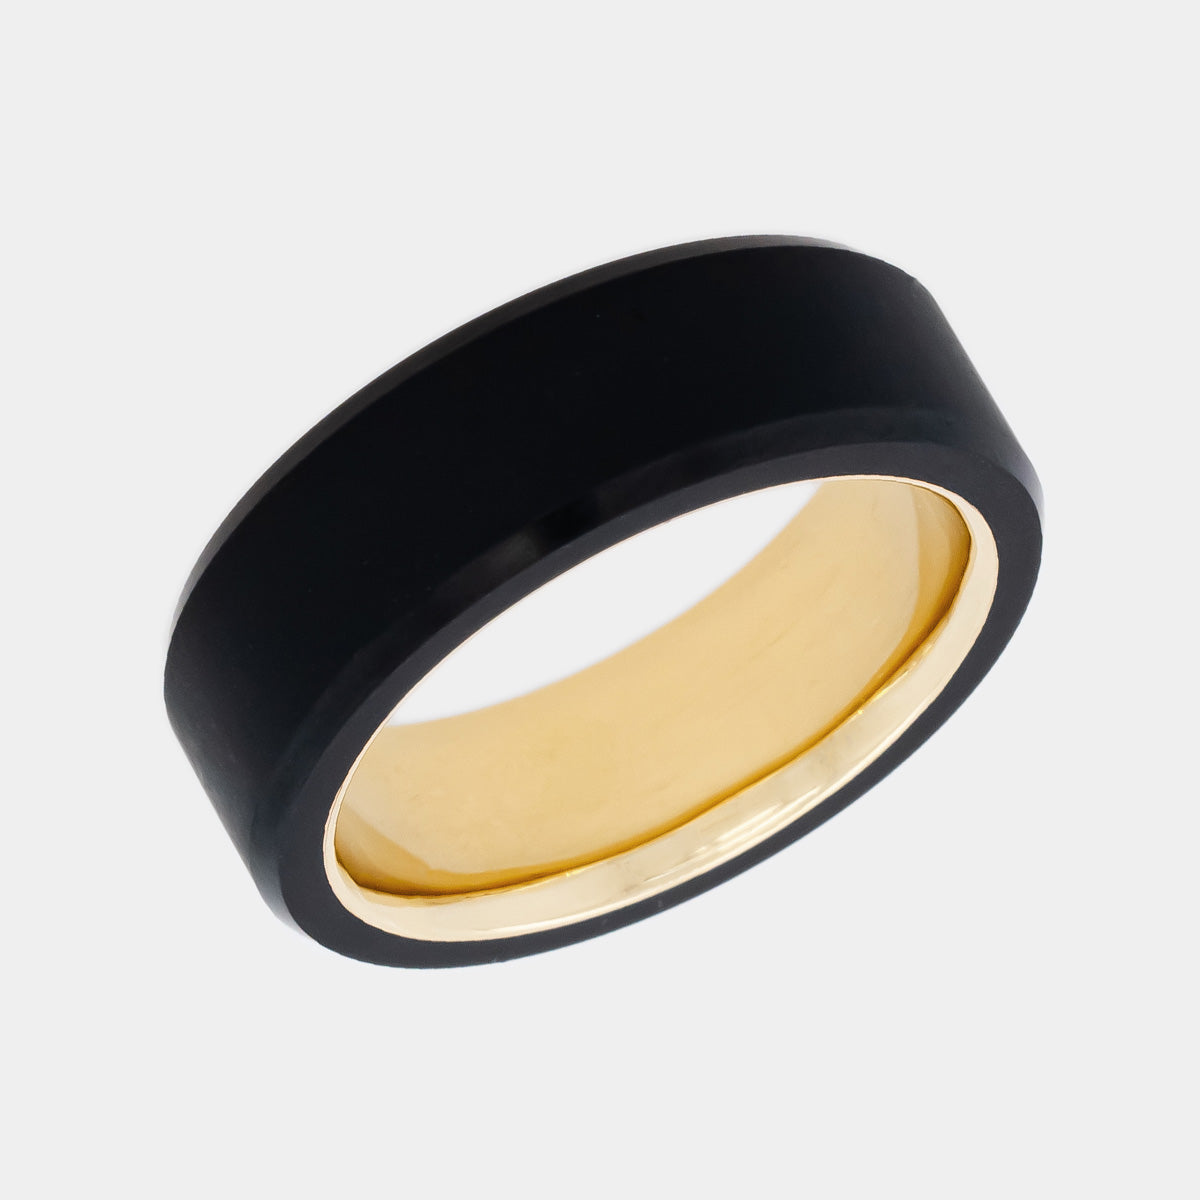 Solid Black Diamond Ring with a 14k Yellow Gold Sleeve on White Background | Elysium Black Diamond Ring - Ares 8mm | Black Diamond Yellow Gold Ring | Products | Image 1